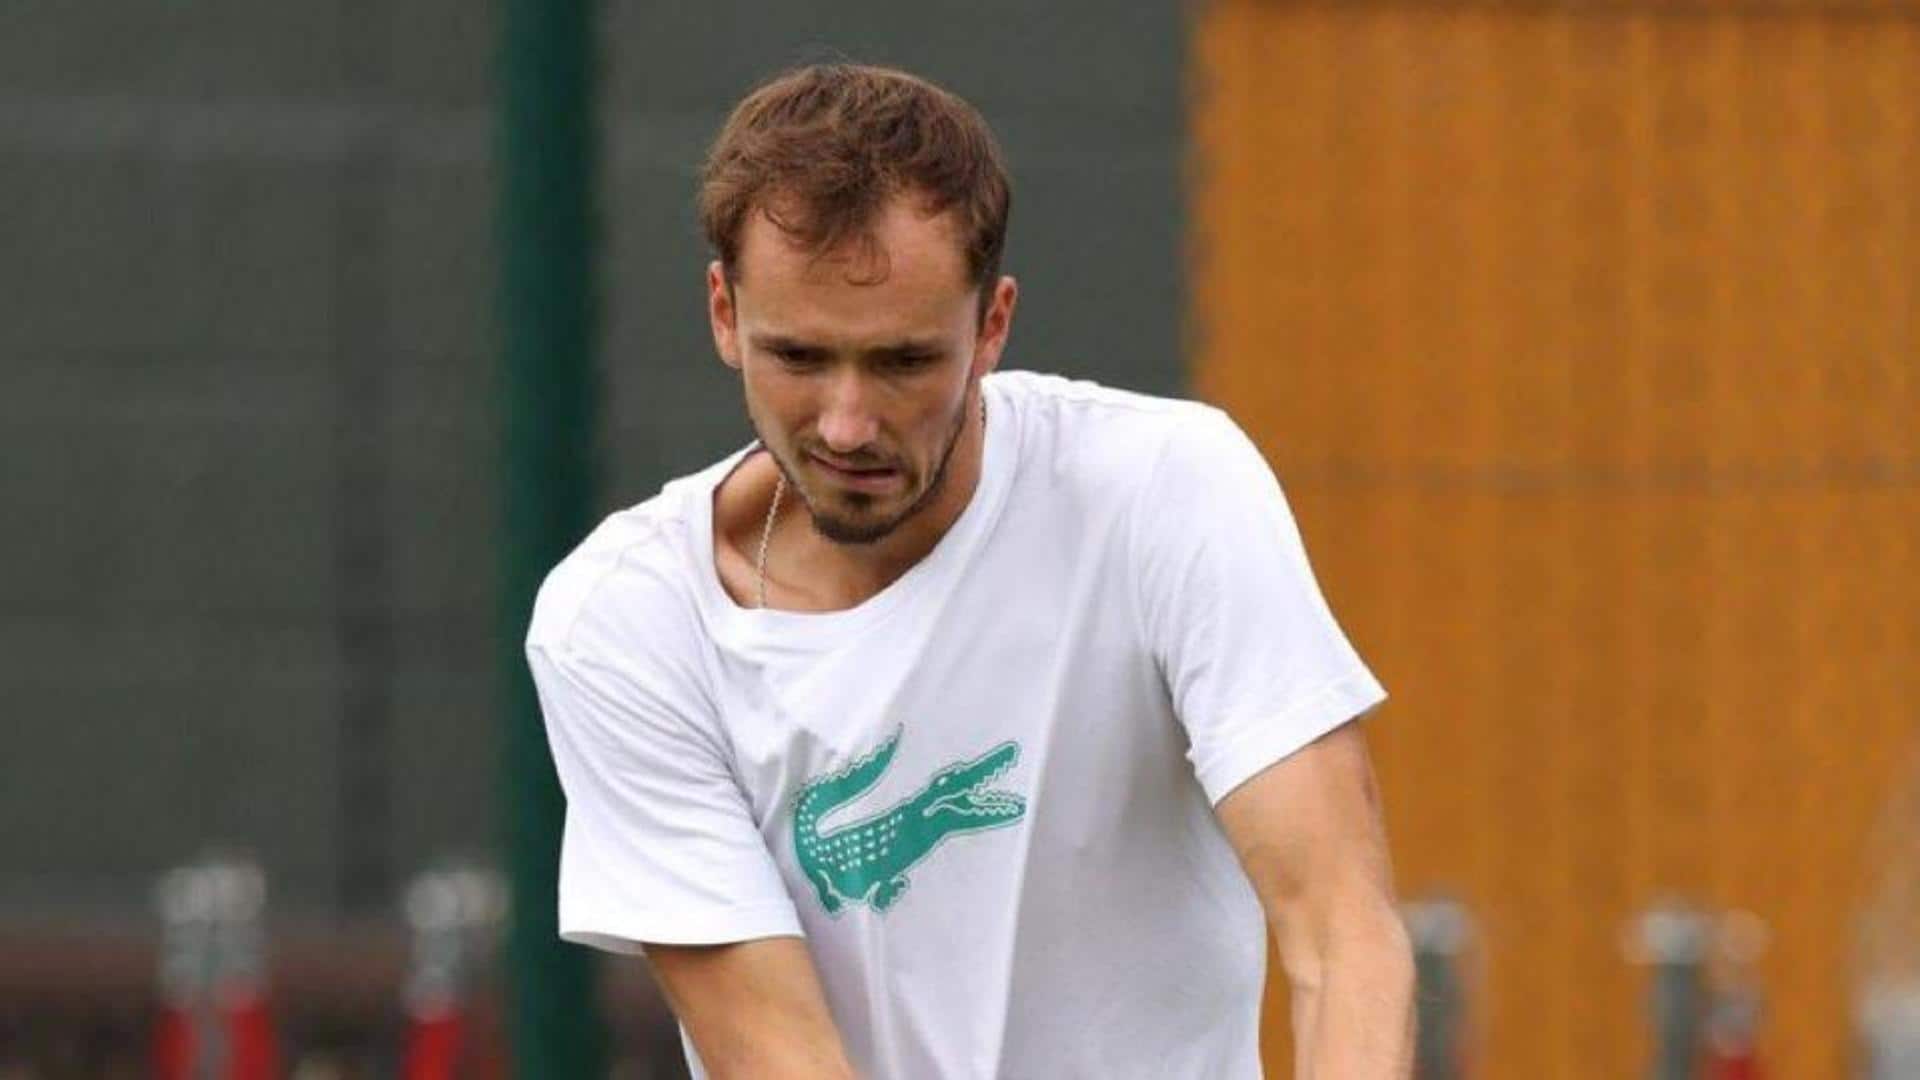 2023 Wimbledon, Daniil Medvedev reaches third round: Key stats